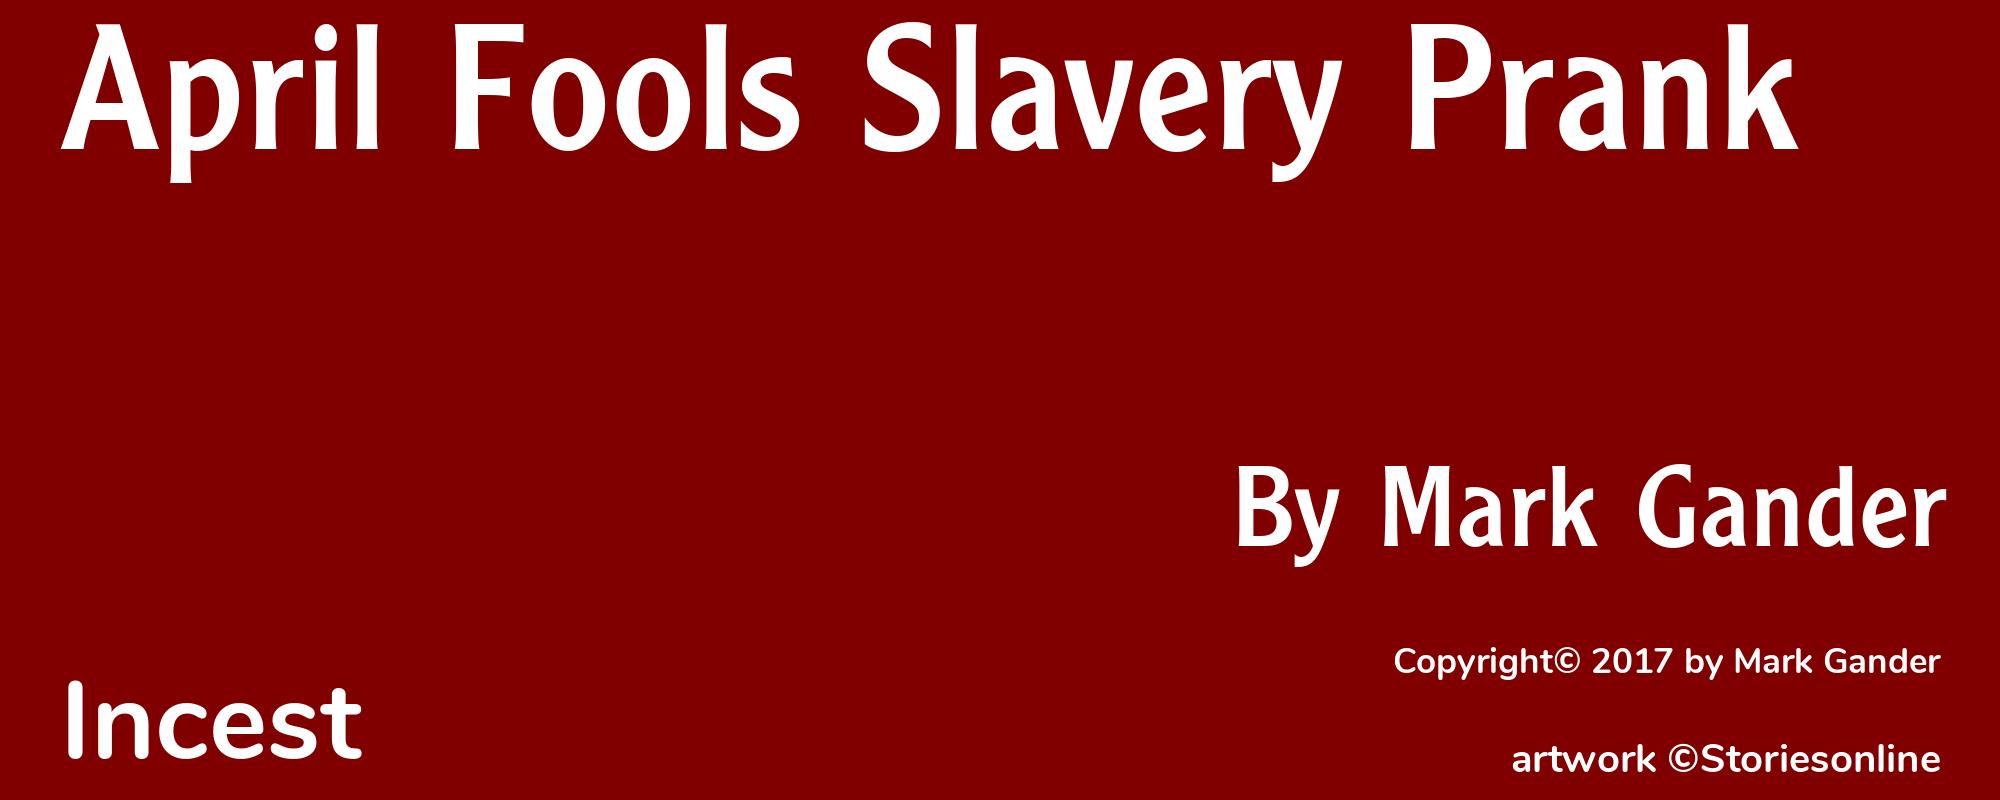 April Fools Slavery Prank - Cover